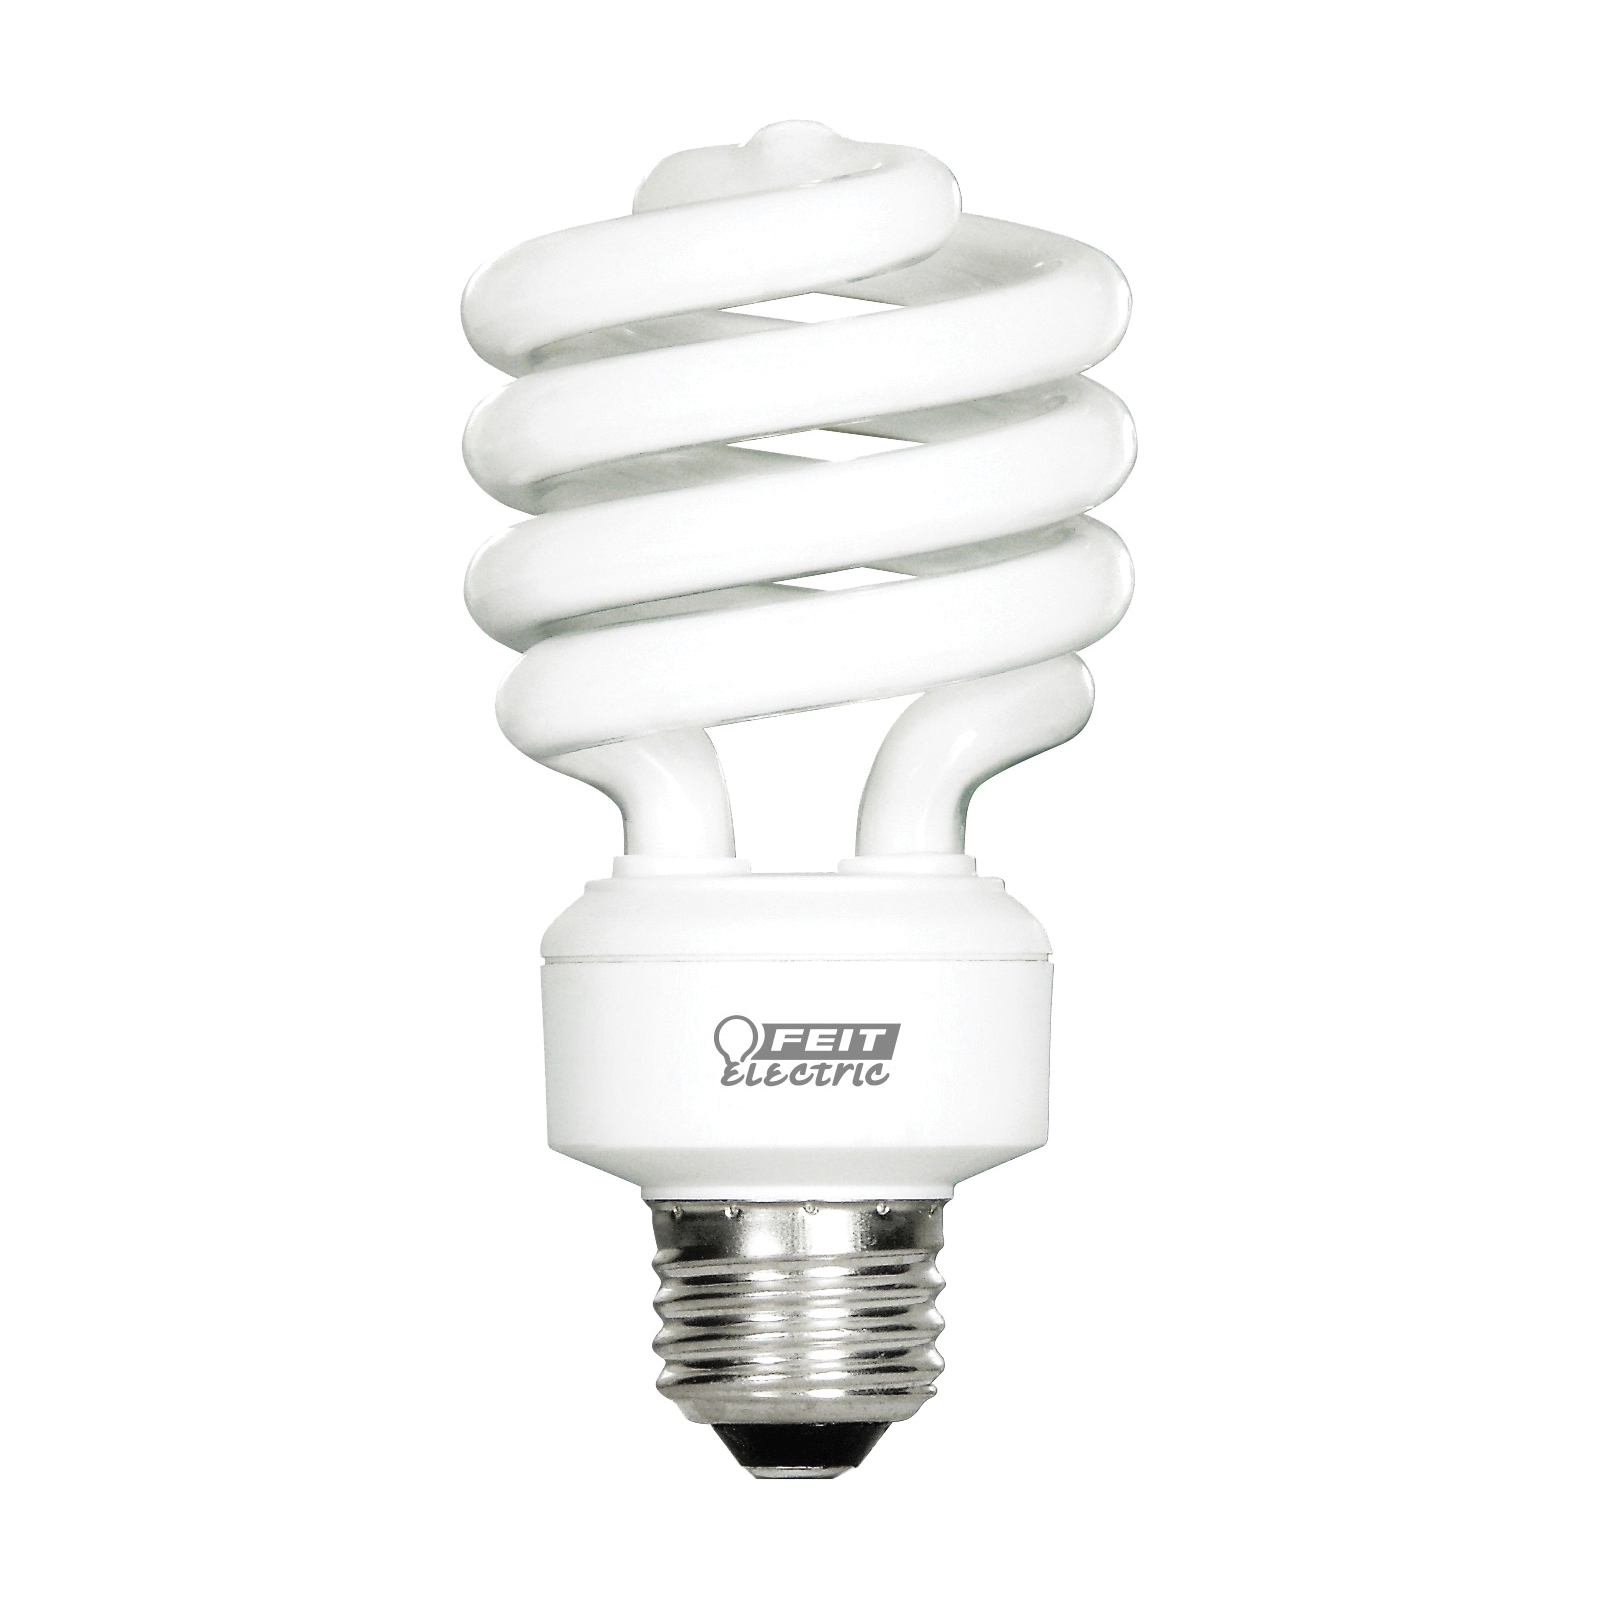 ESL23TM/D/4 Compact Fluorescent Bulb, 23 W, Spiral Lamp, Medium E26 Lamp Base, 1600 Lumens, Daylight Light